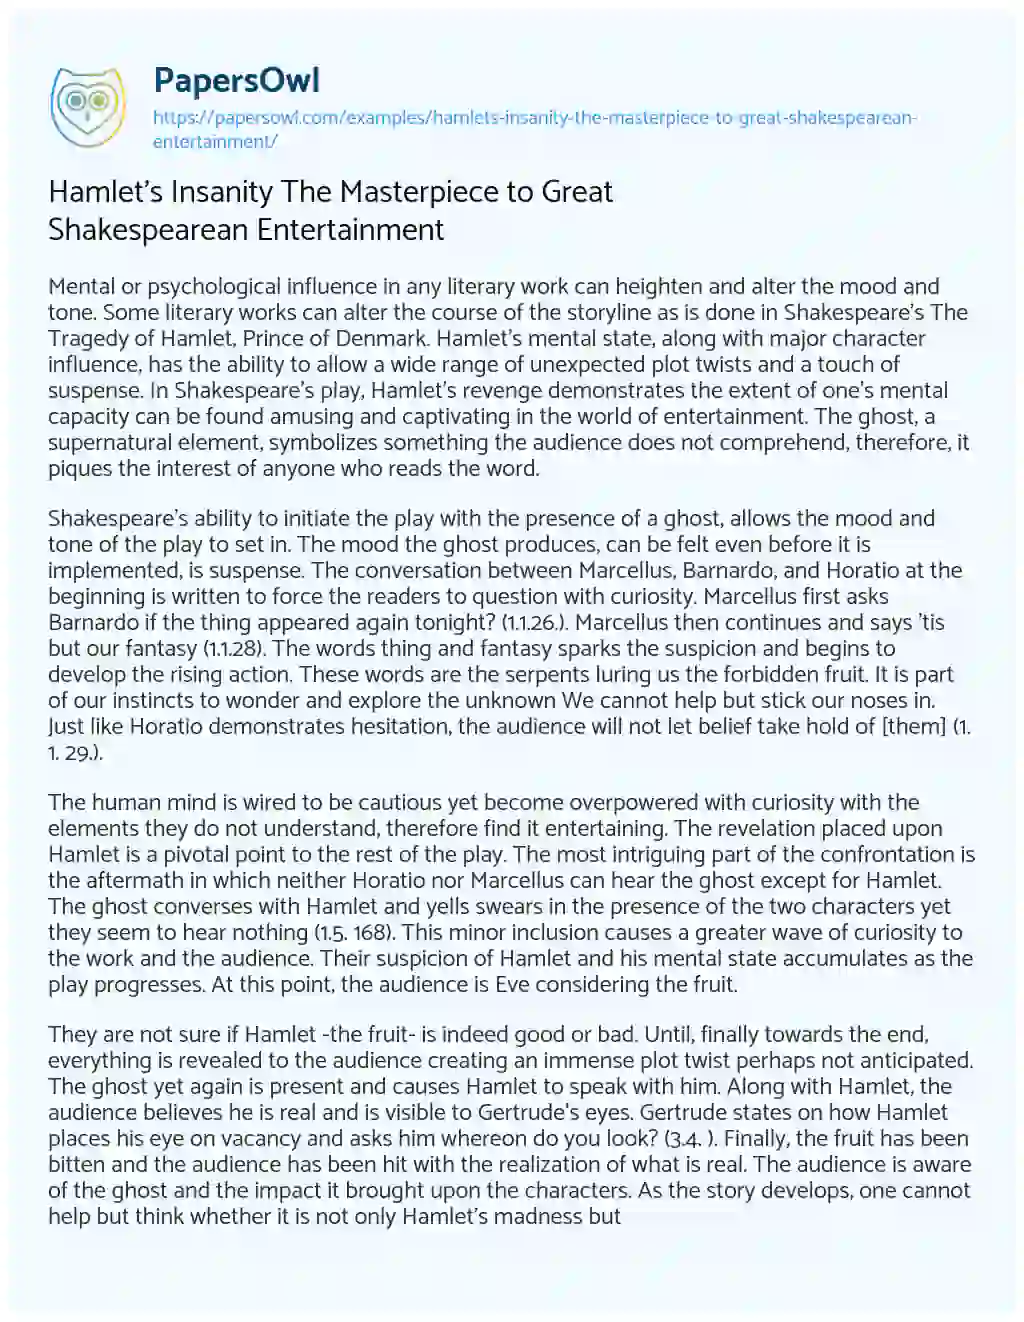 Essay on Hamlet’s Insanity the Masterpiece to Great Shakespearean Entertainment